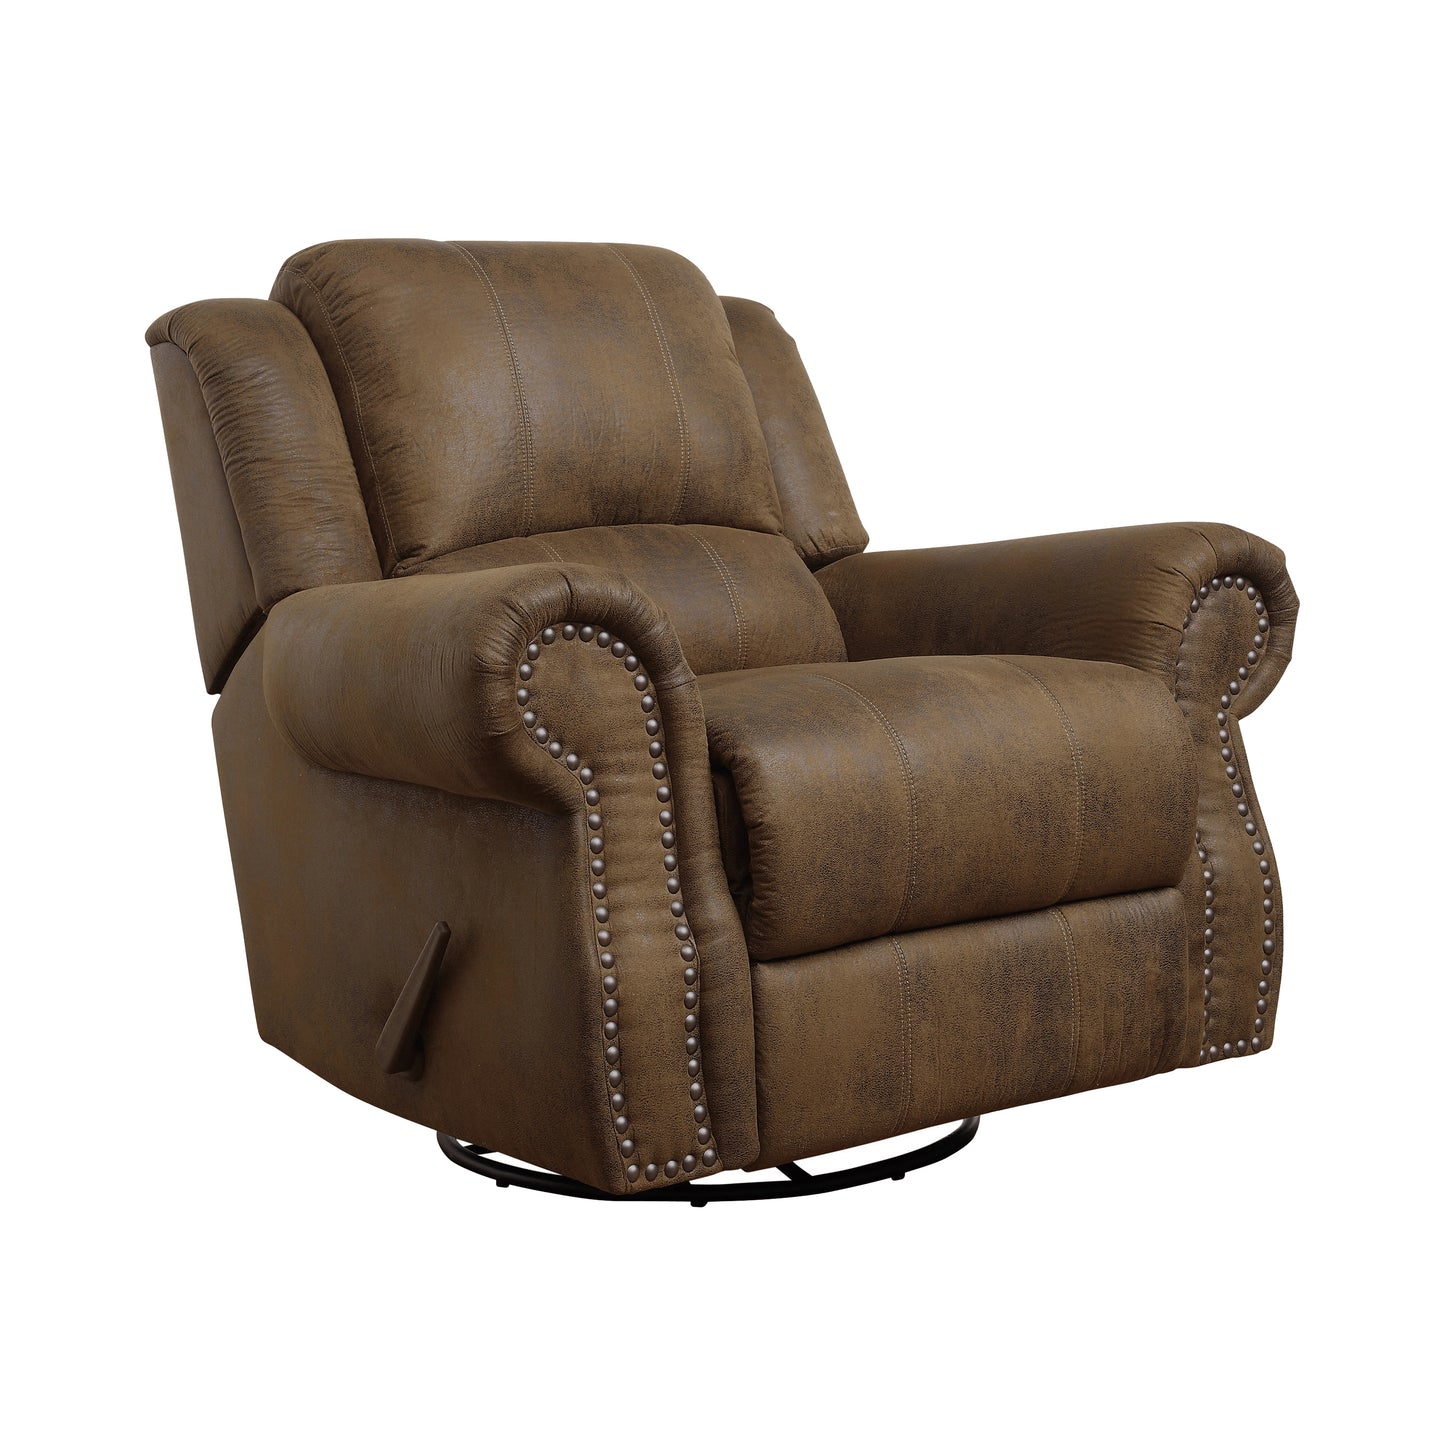 Sir Rawlinson Upholstered Living Room Set Buckskin Brown - 650151